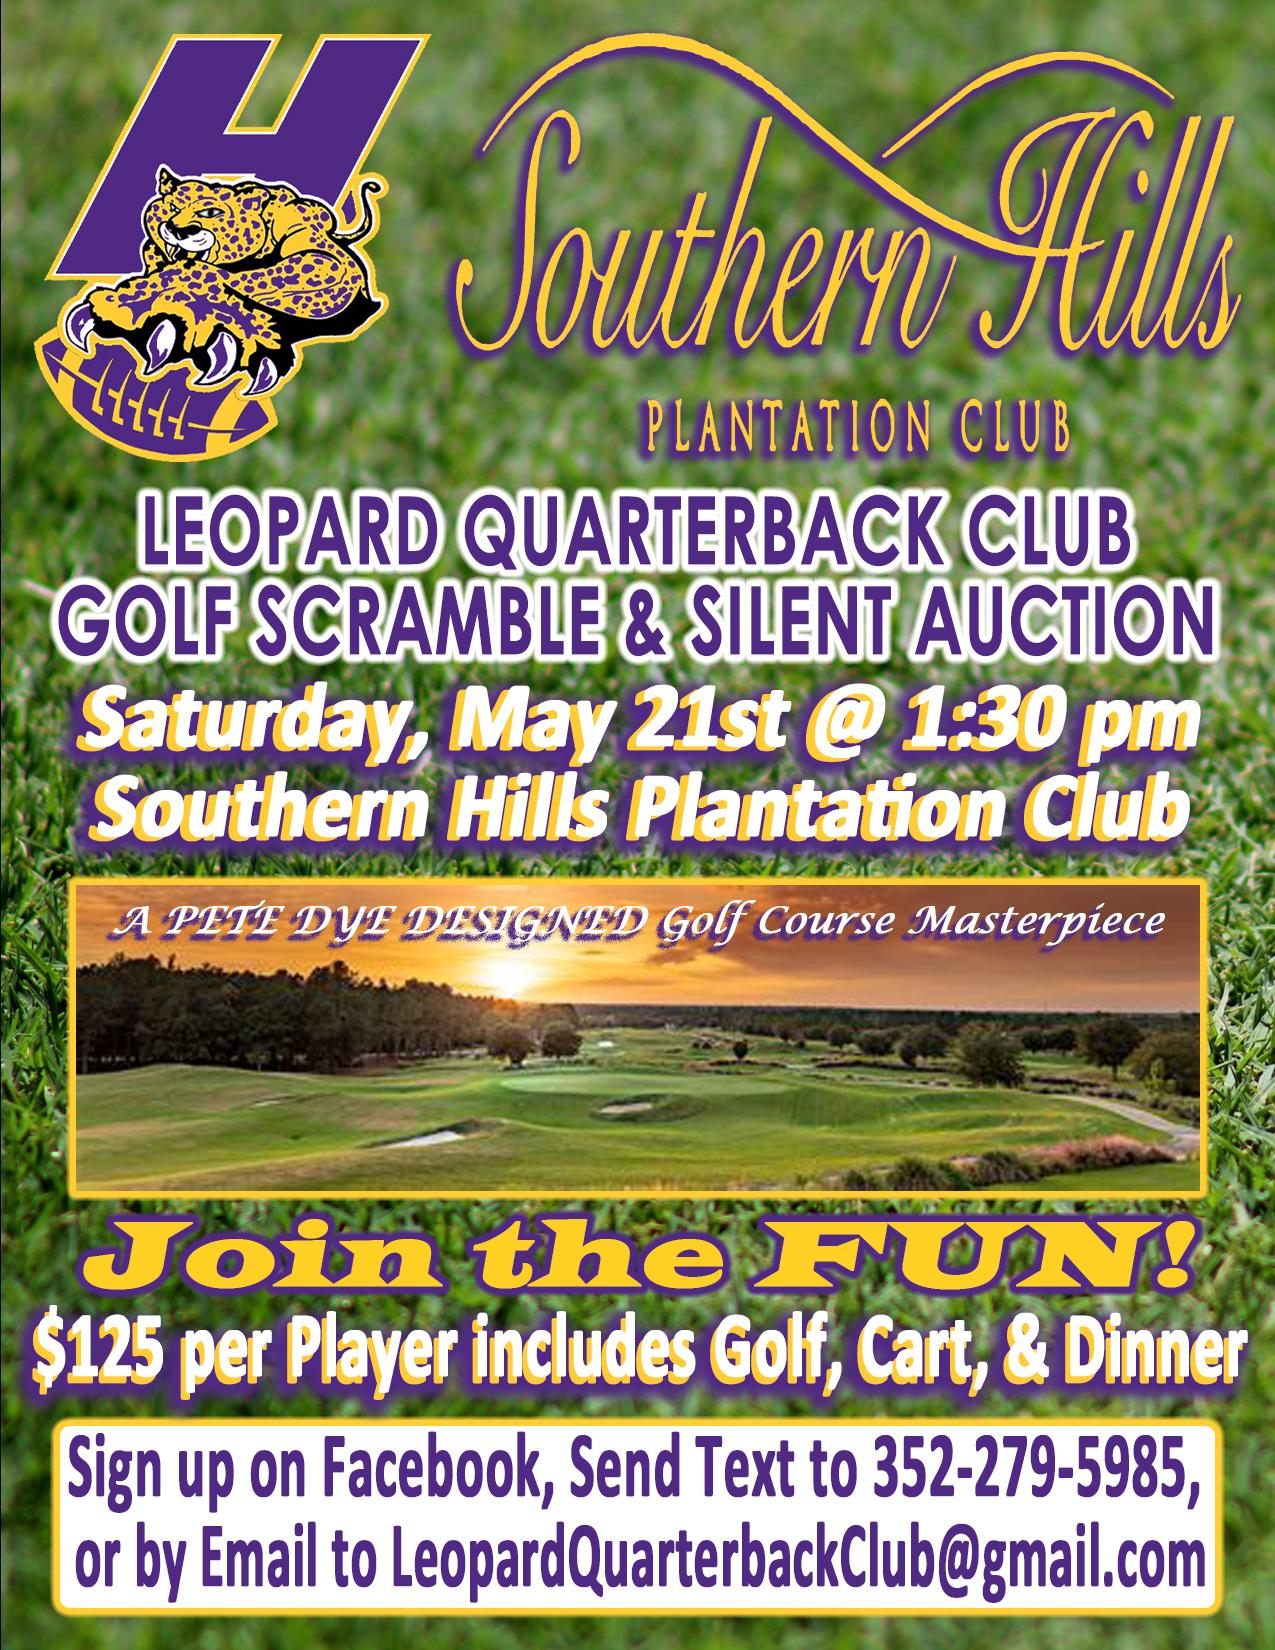 2023 Leopard Quarterback Club Golf Scramble & Silent Auction